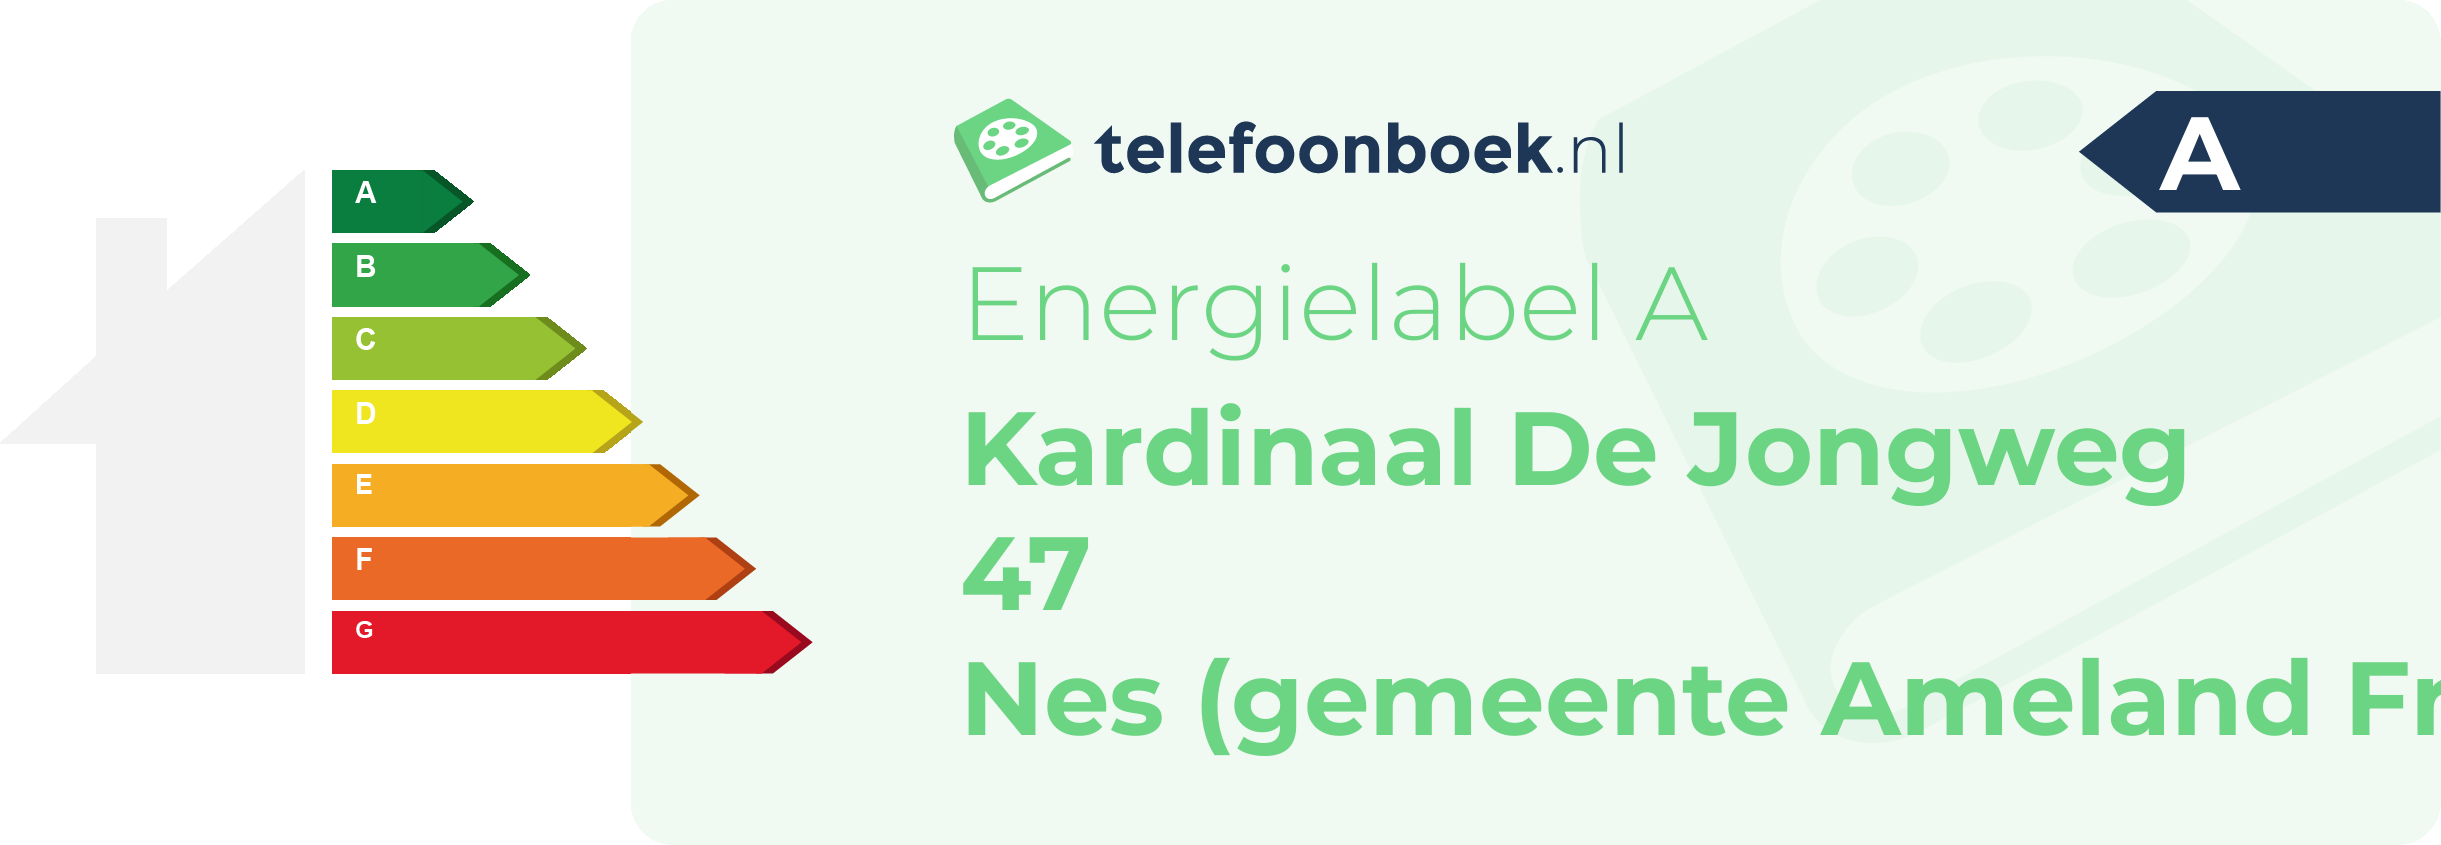 Energielabel Kardinaal De Jongweg 47 Nes (gemeente Ameland Friesland)